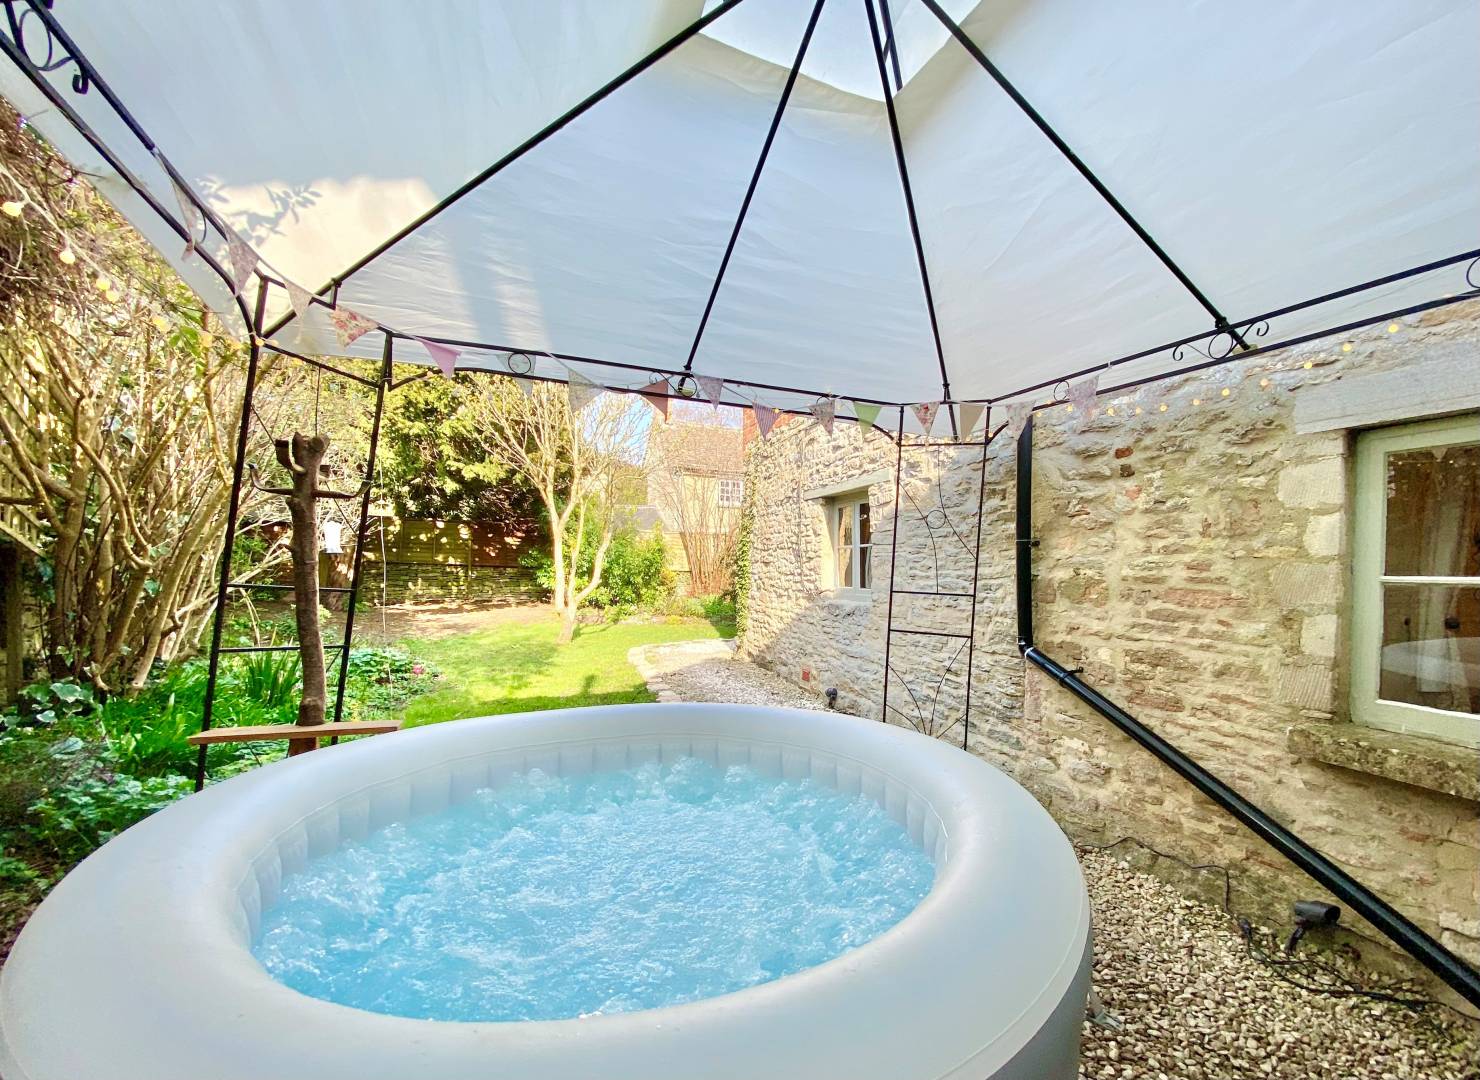 Hot tub under a gazebo in an English country garden